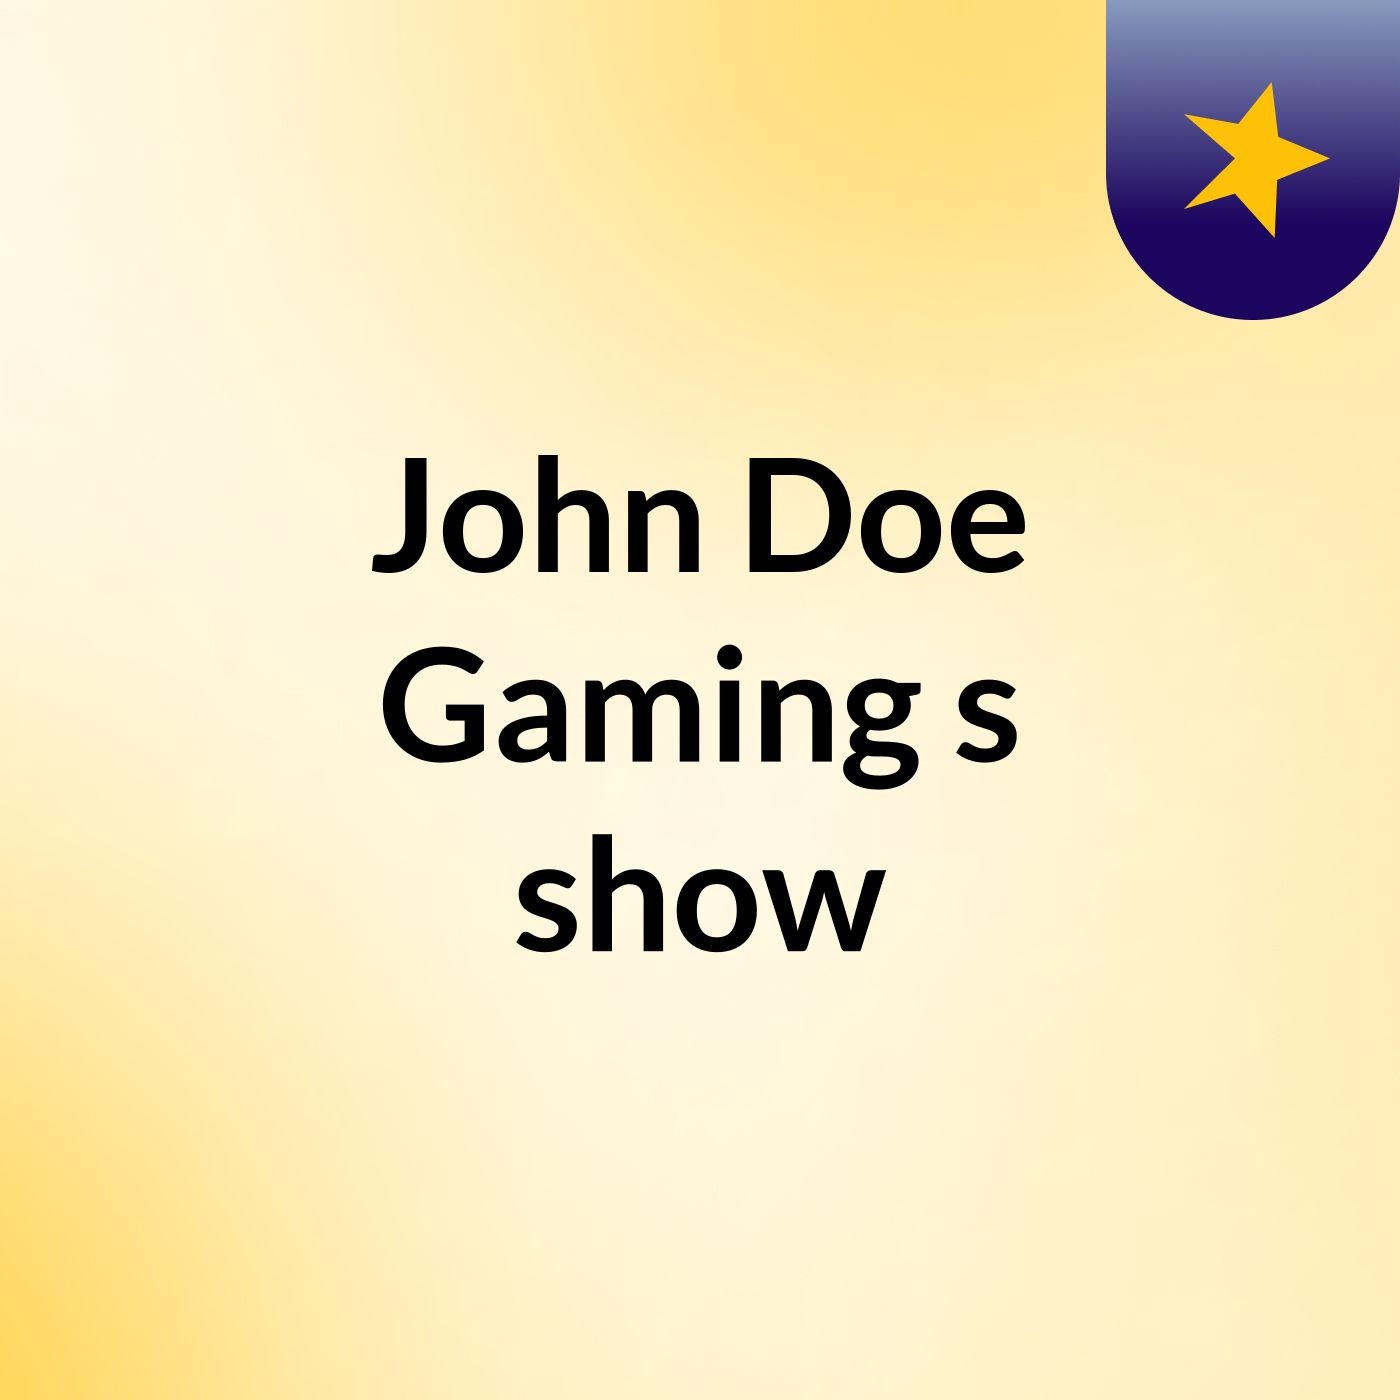 John Doe Gaming's show